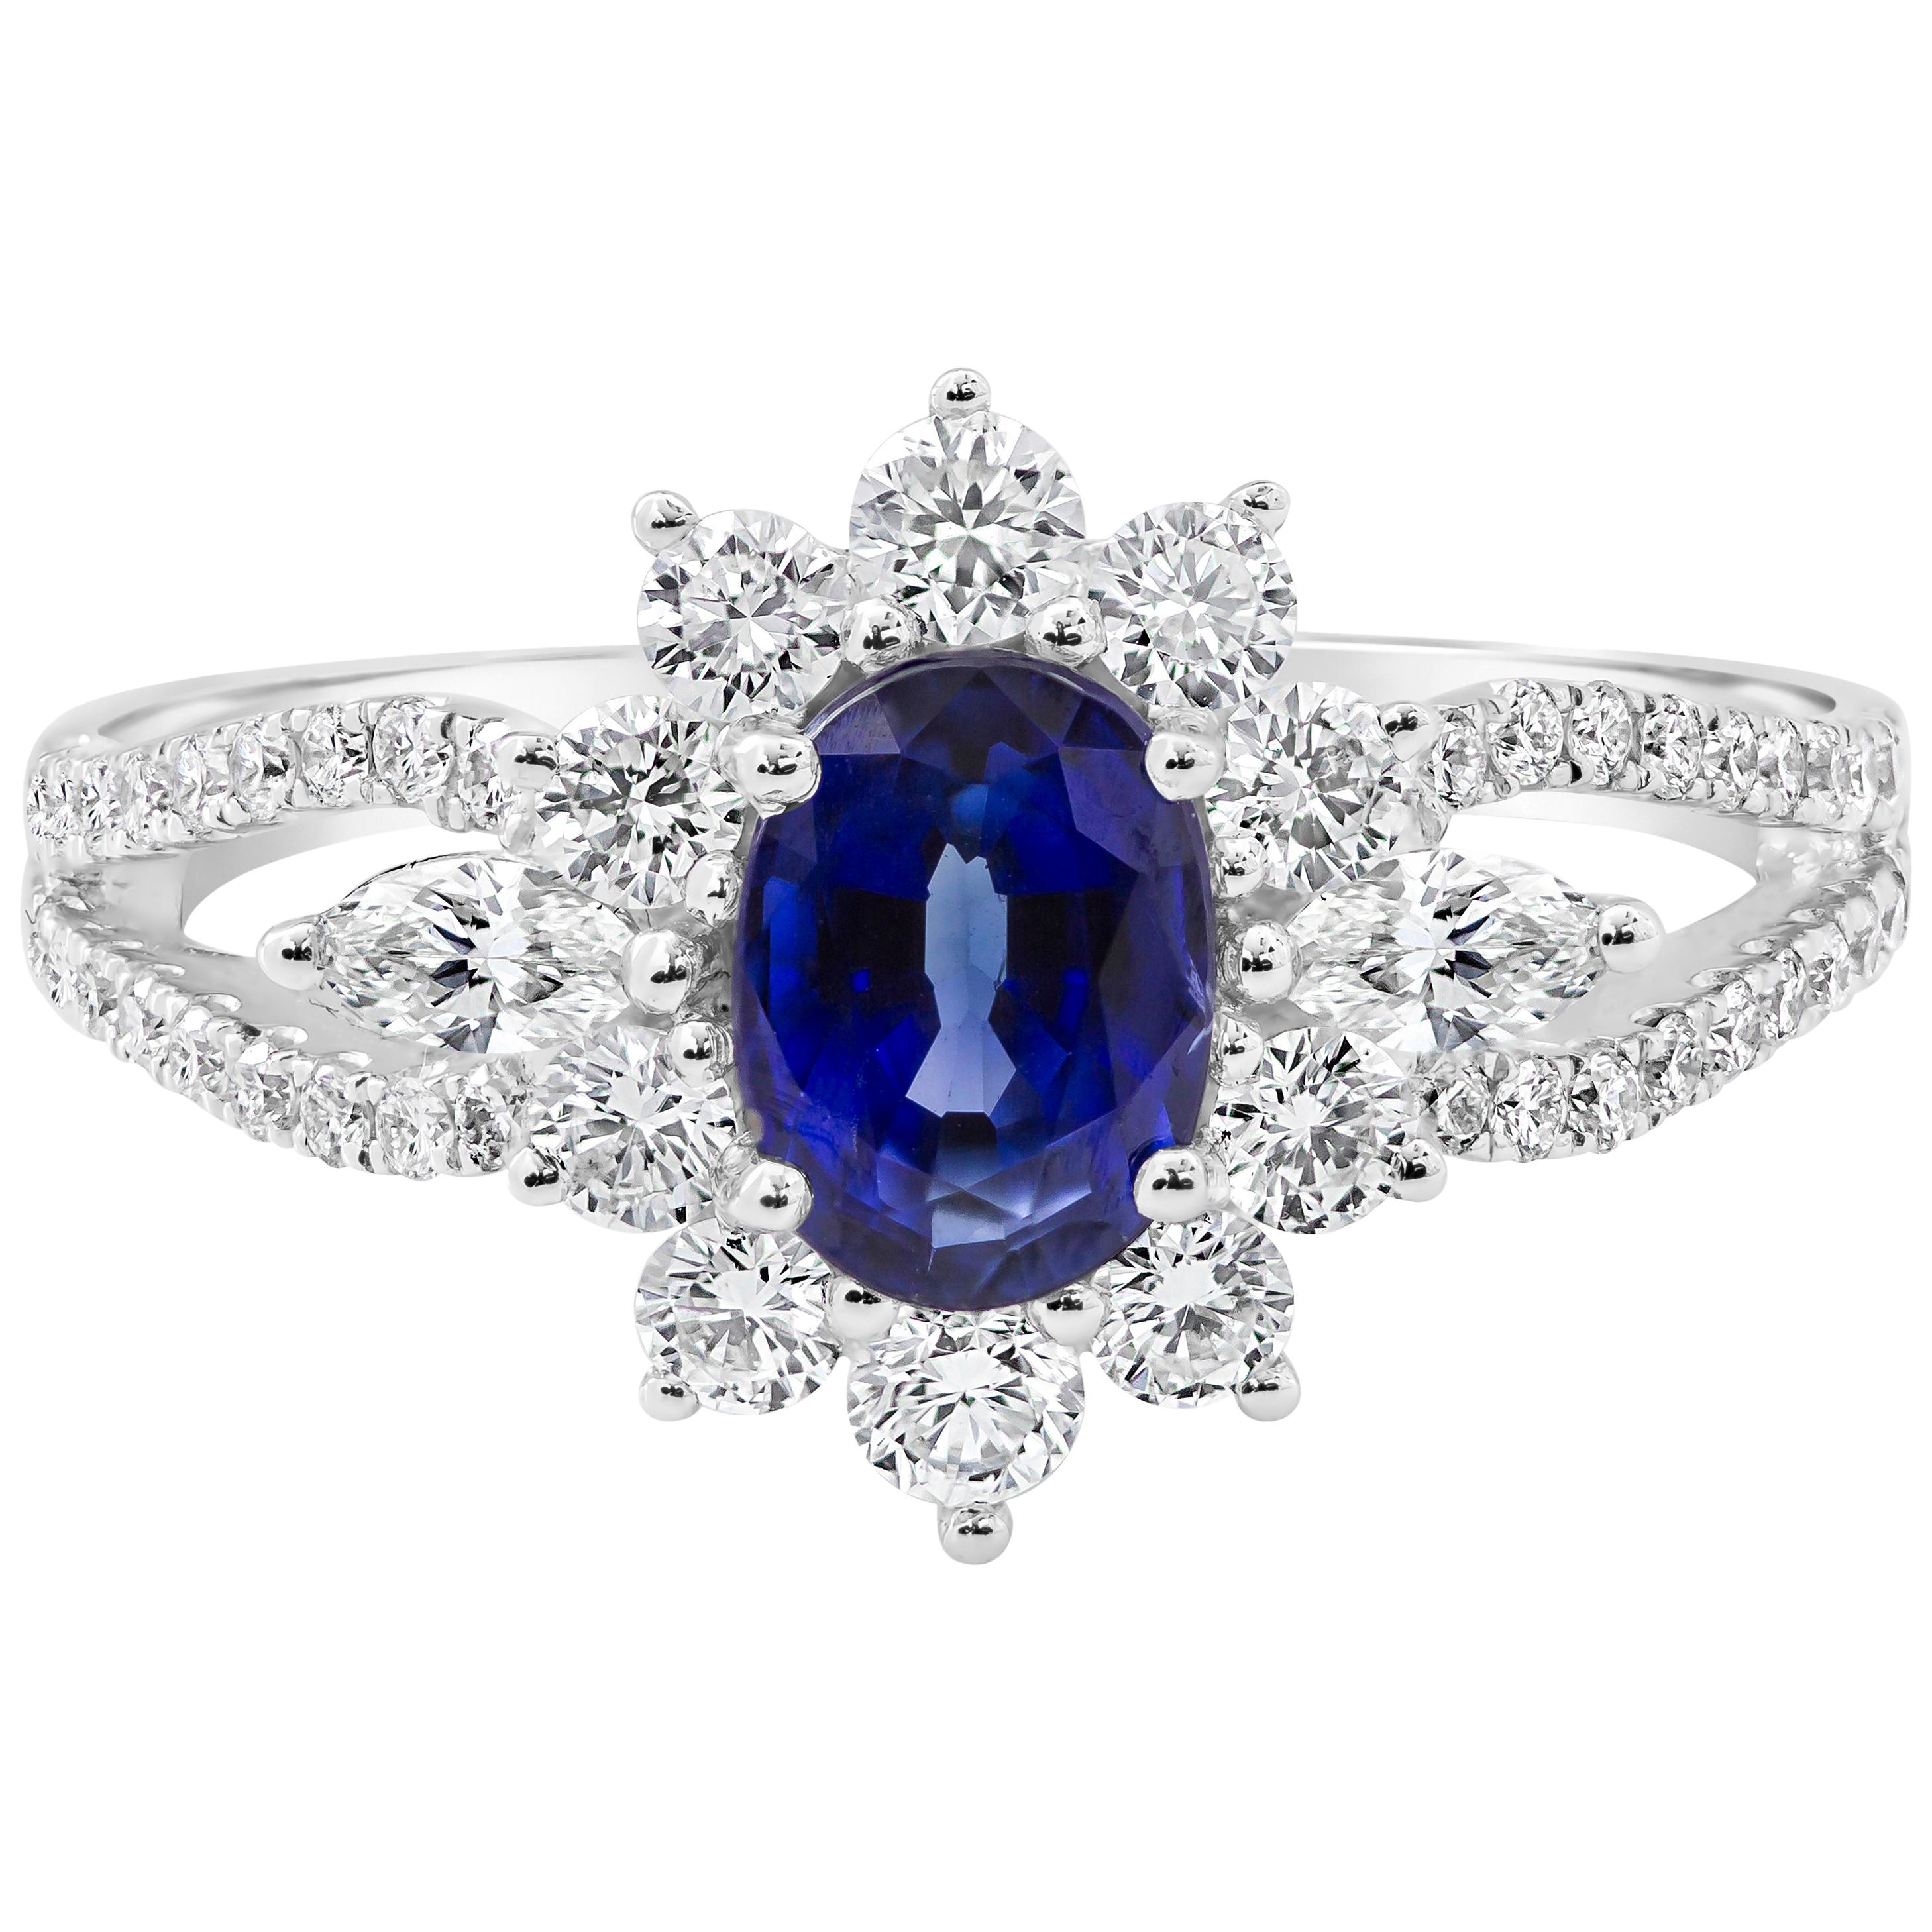 Roman Malakov 1.23 Carat Oval Cut Blue Sapphire and Diamond Halo Engagement Ring